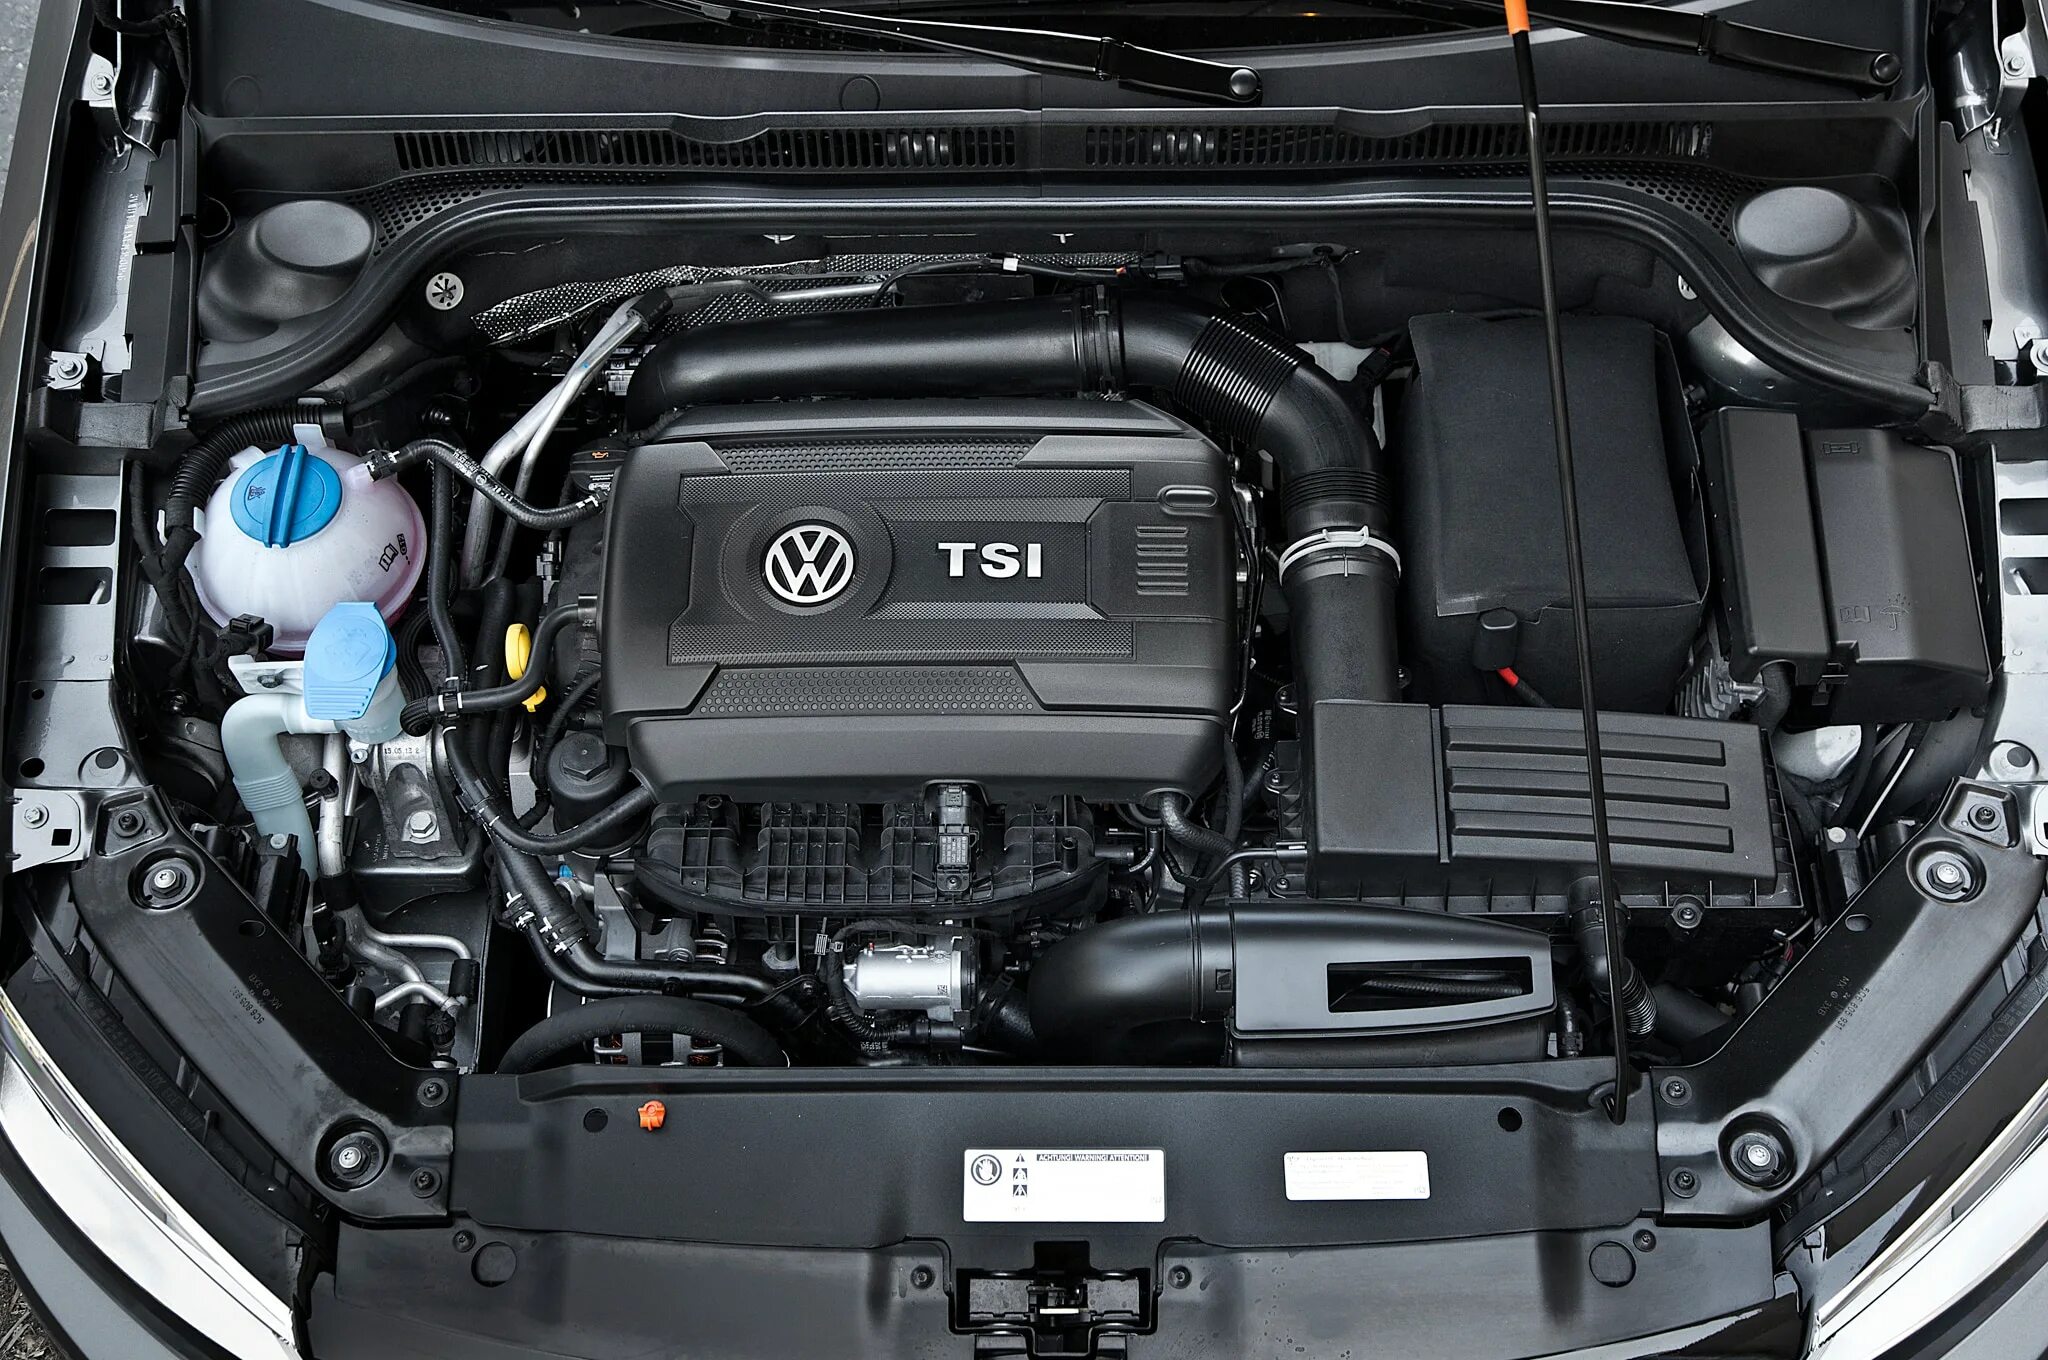 Двигатель Volkswagen TSI 2.0. Volkswagen Jetta 6 двигатели. VW Jetta 1-4 TSI двигатель. Фольксваген Джетта двигатель 2.0.